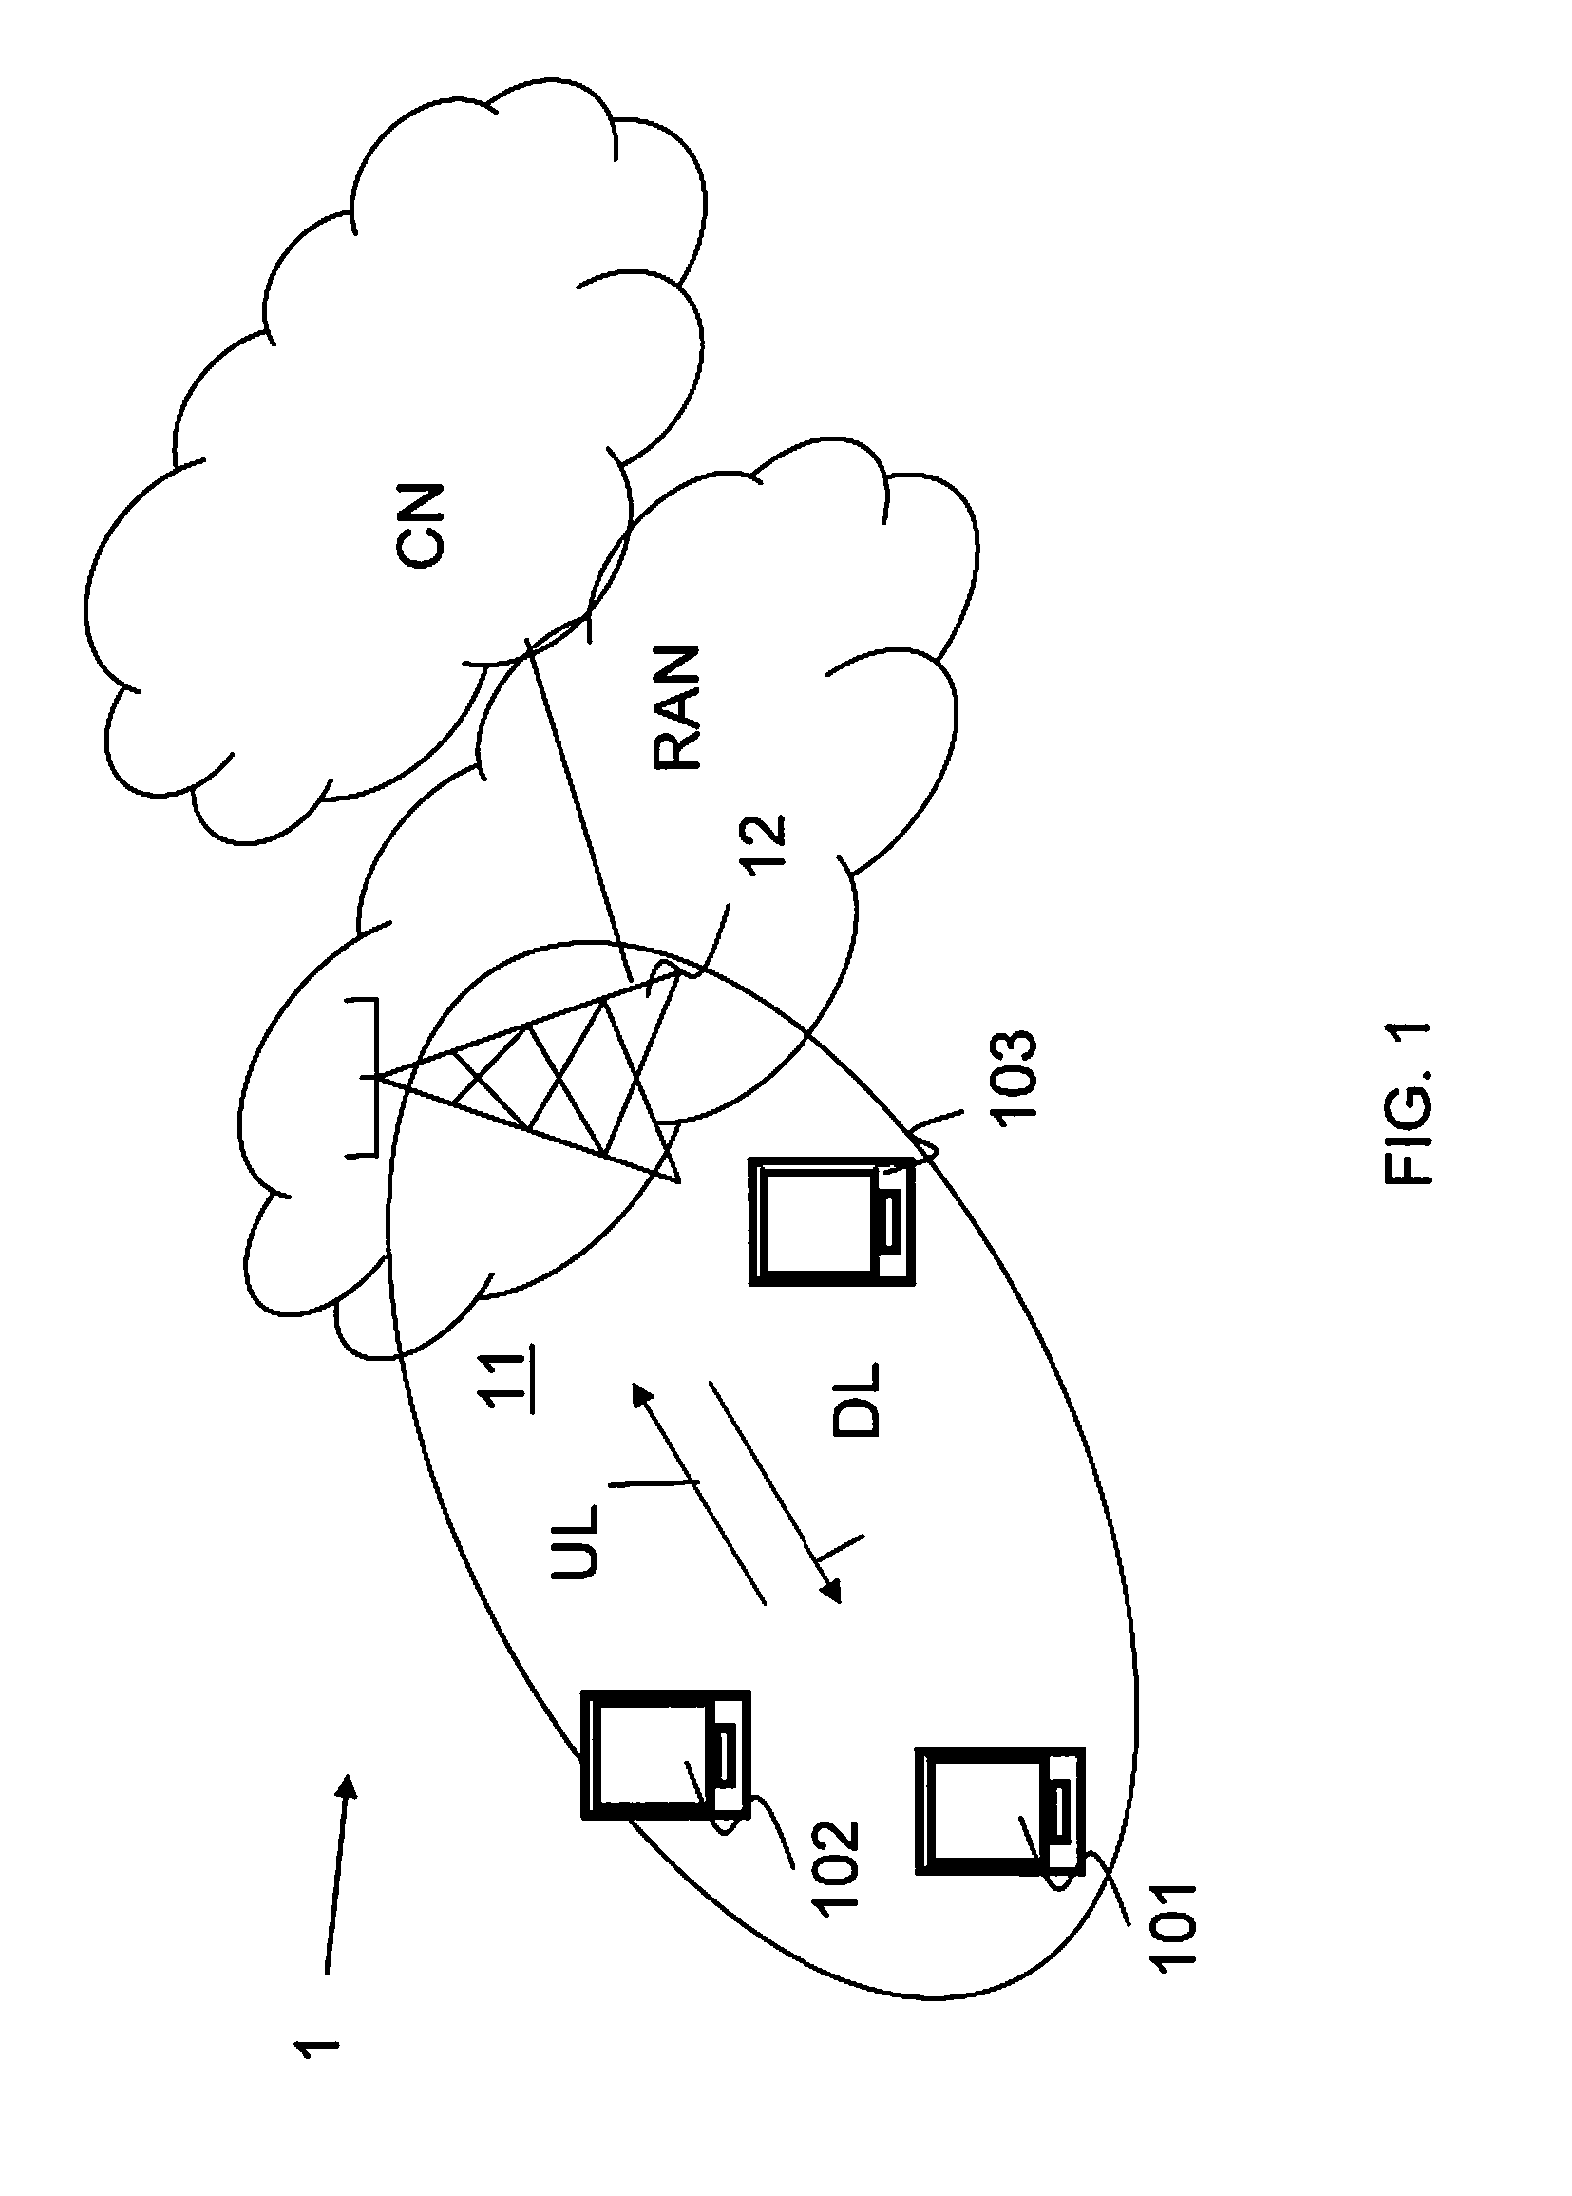 Radio network node and method therein